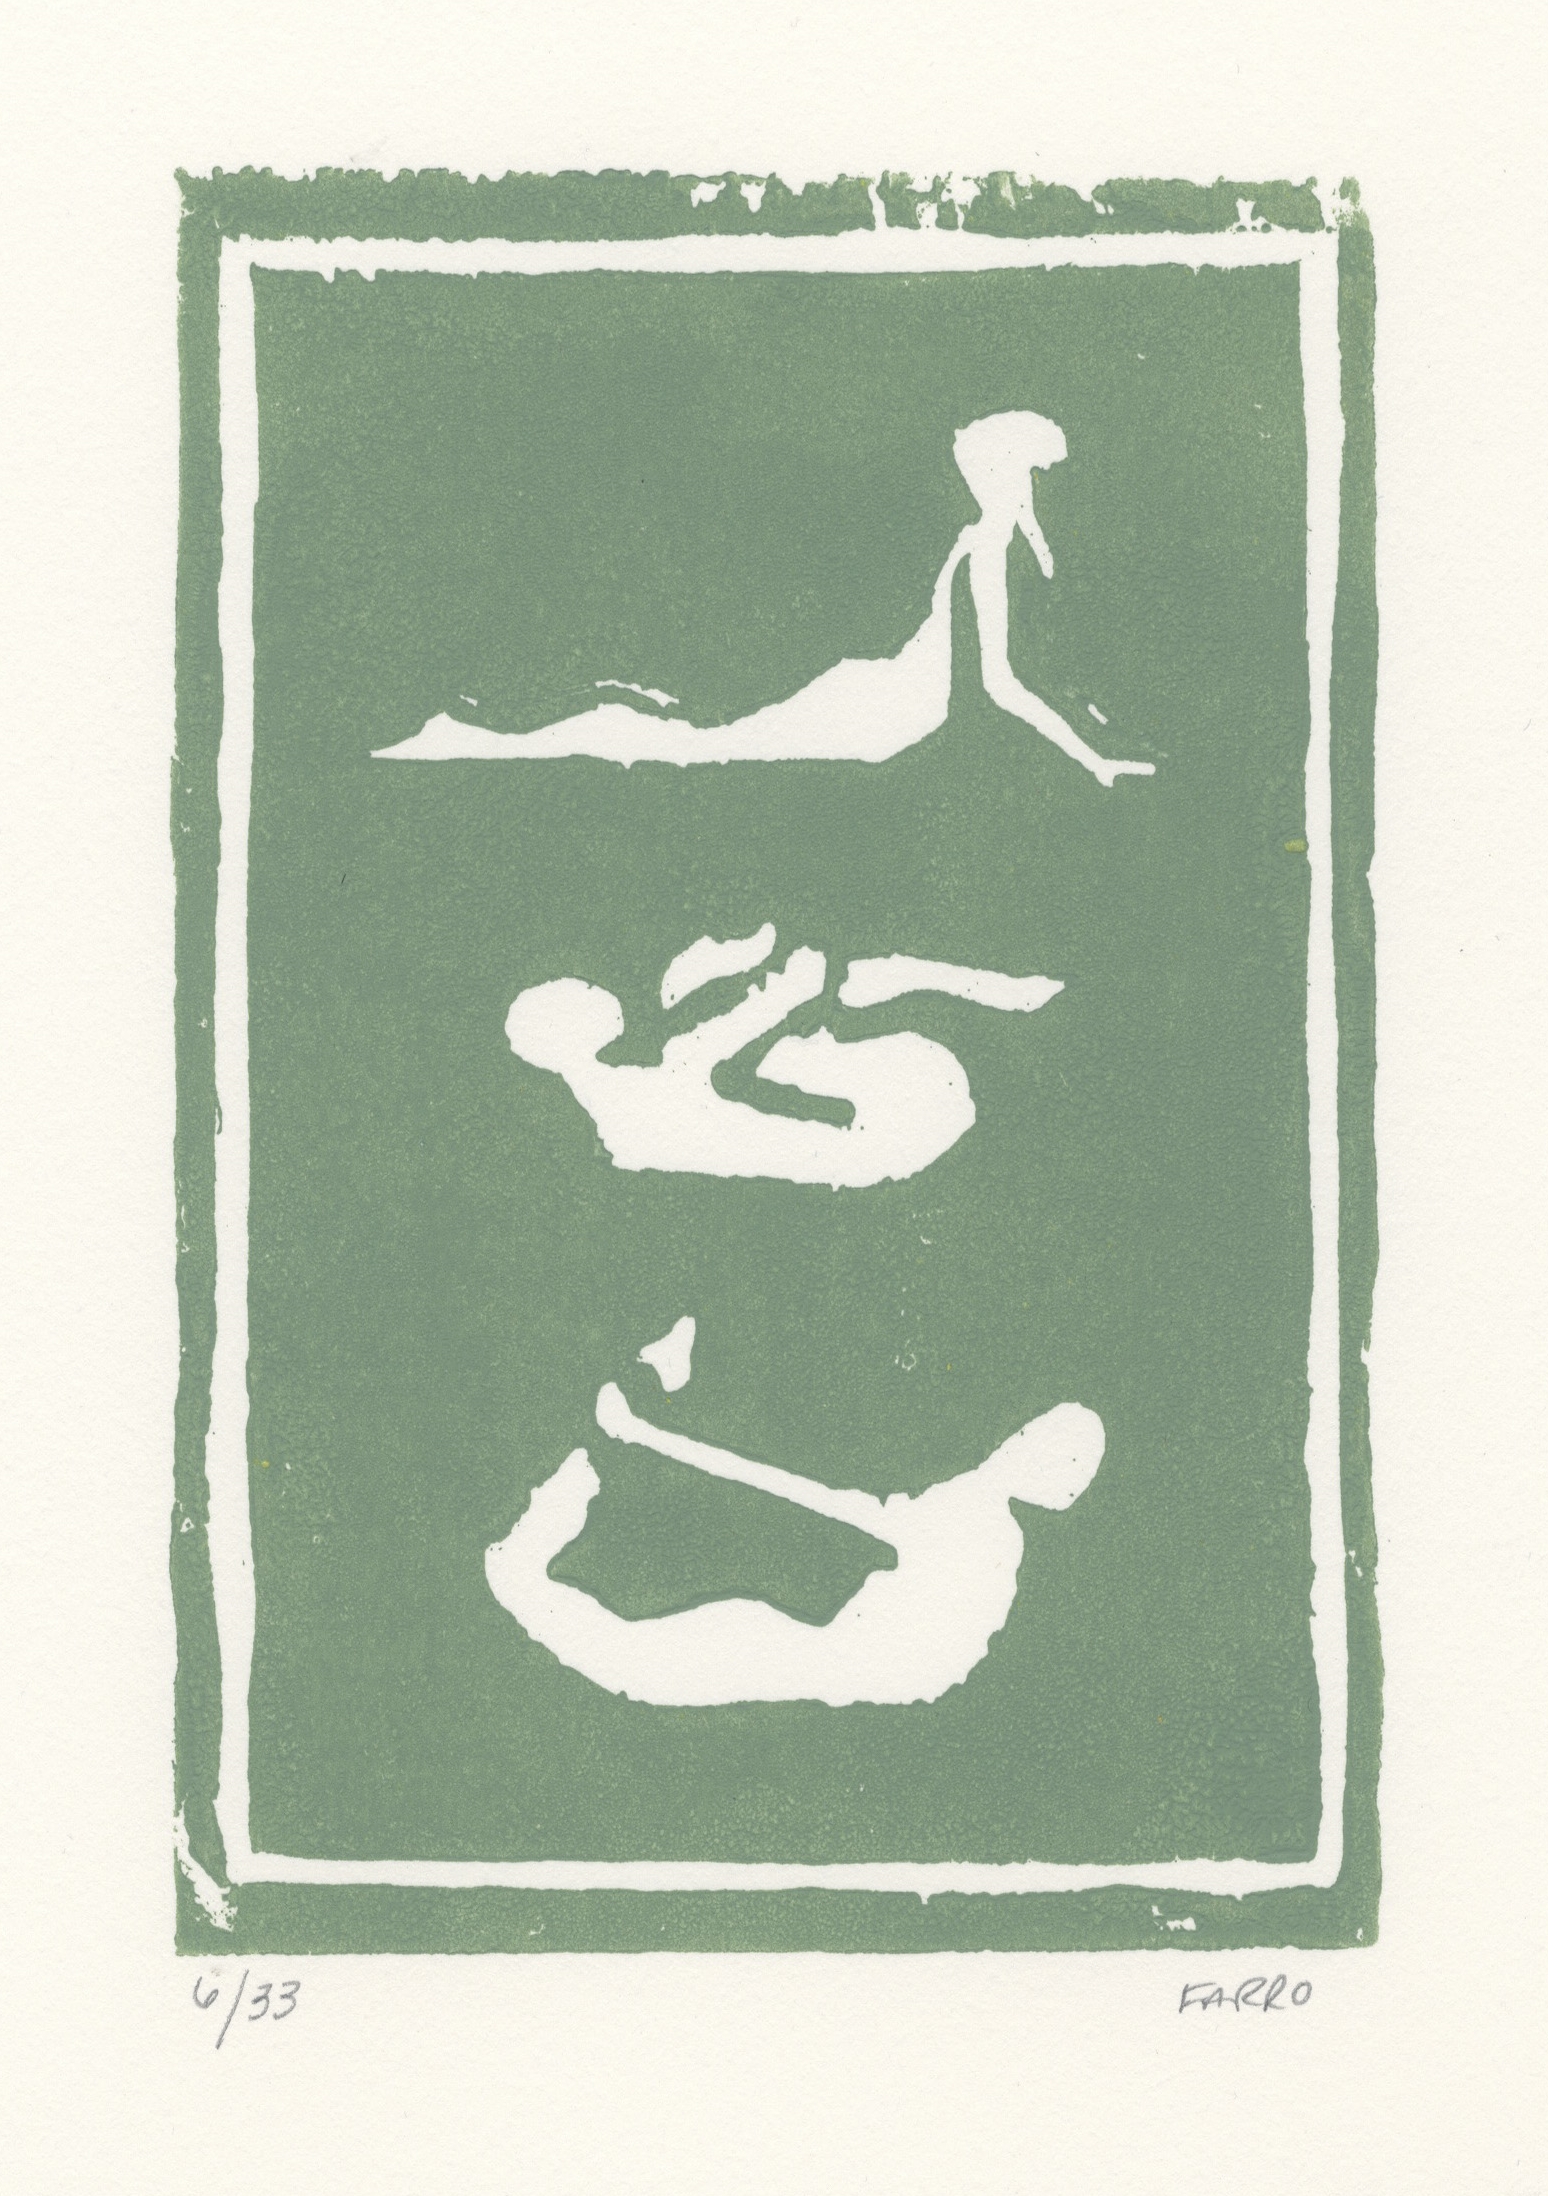   yoga poses   woodblock print  edition of 33  5x7"  2012 